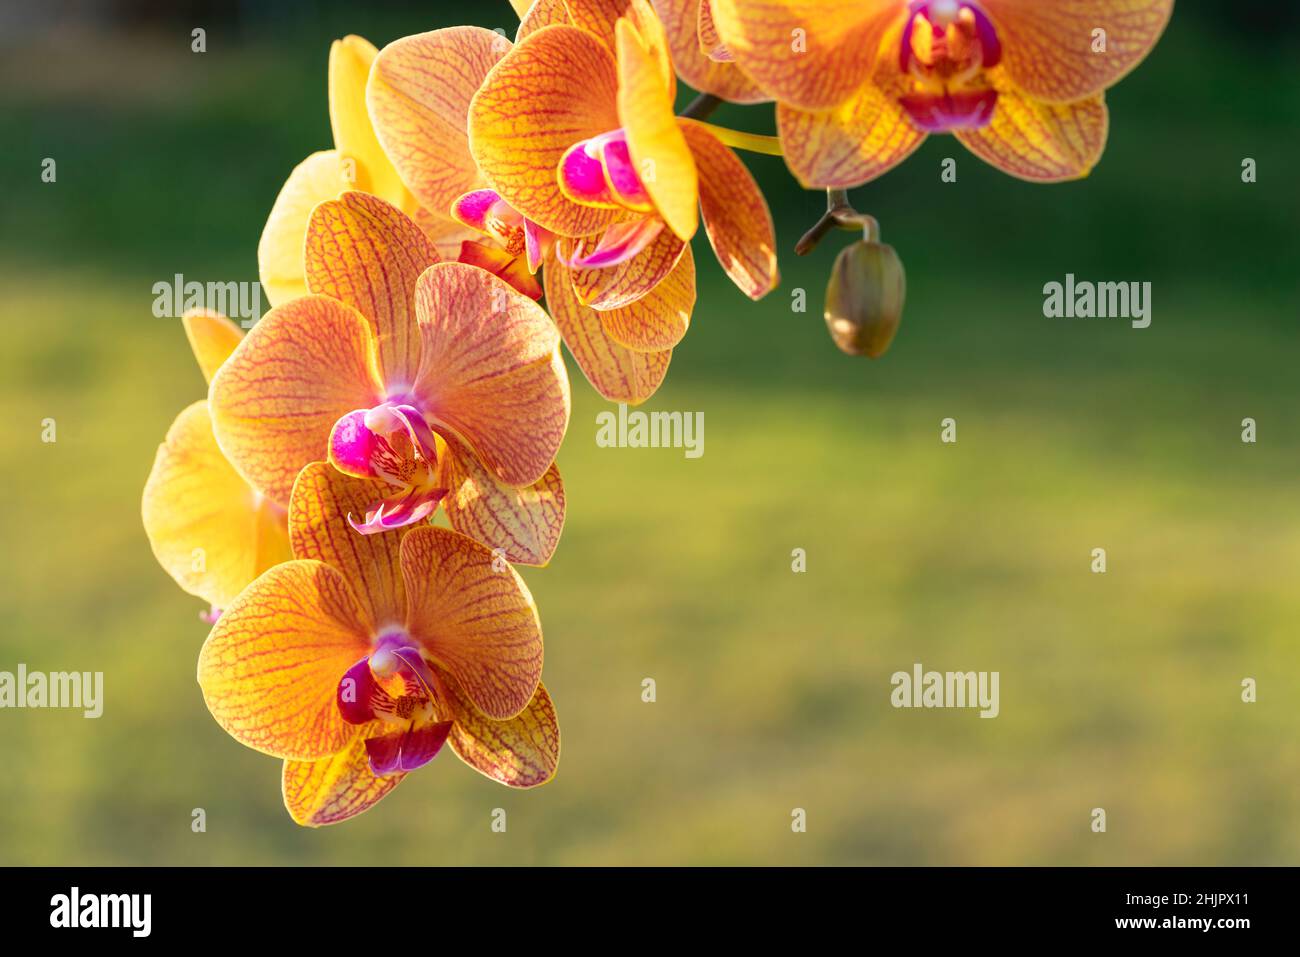 Orange Phalaenopsis Orchid flower house plant. Floral background. Selective close-up focus. Stock Photo